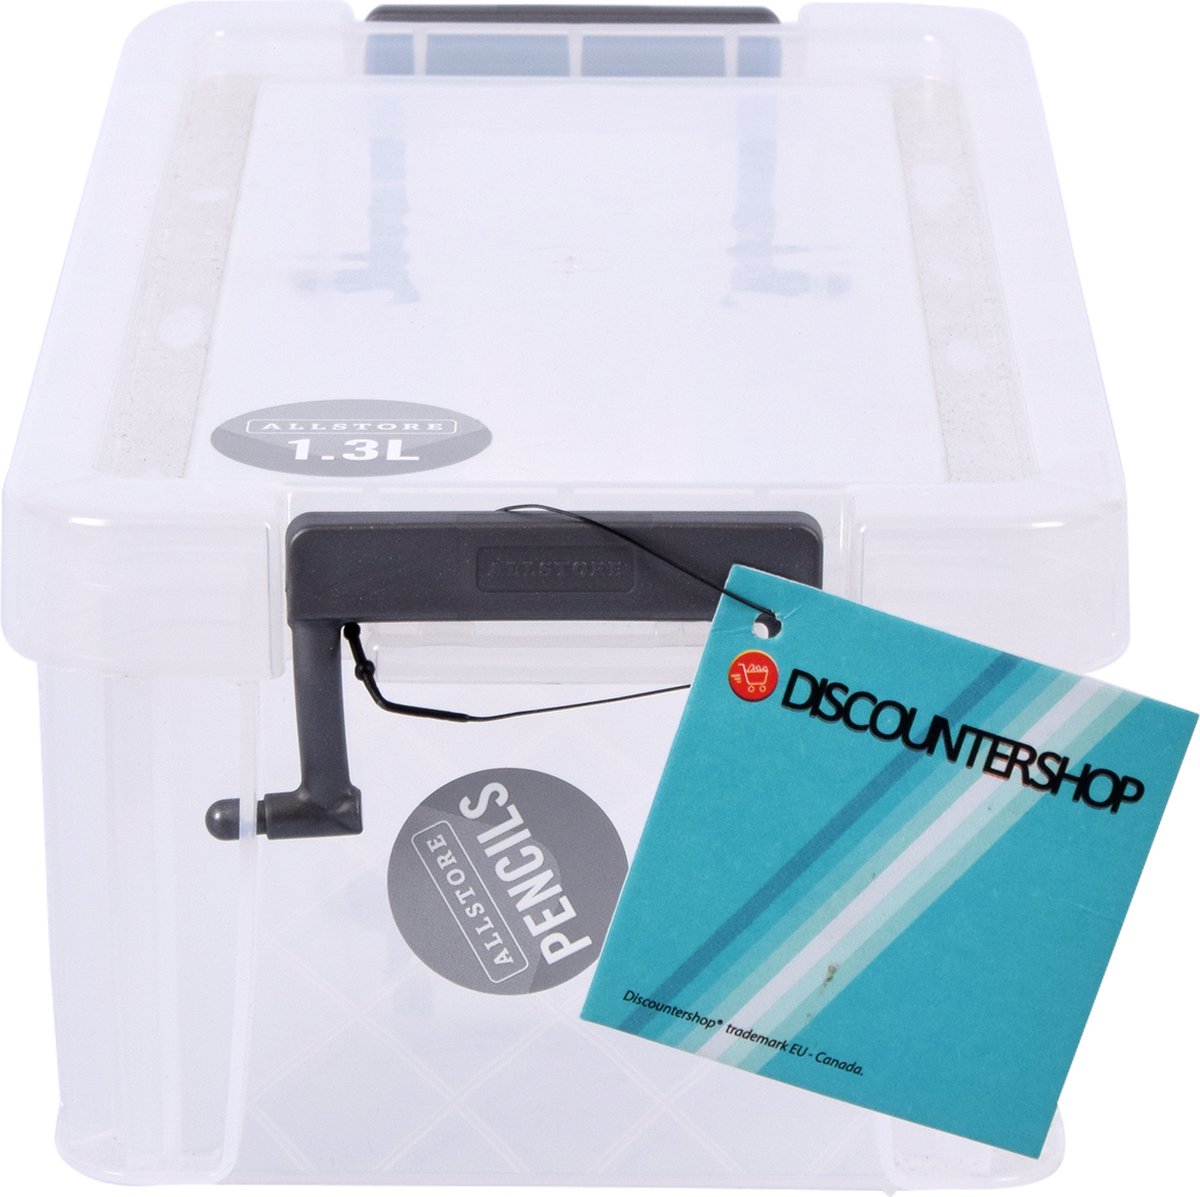 Transparante Opbergbox met Deksel - 1.3L - Stevig Plastic - Handige Huishoud Organizer - Wit & Transparant - Compact Formaat 23,5cm x 8,5cm x 11.5cm - Voor Thuis en Klussen